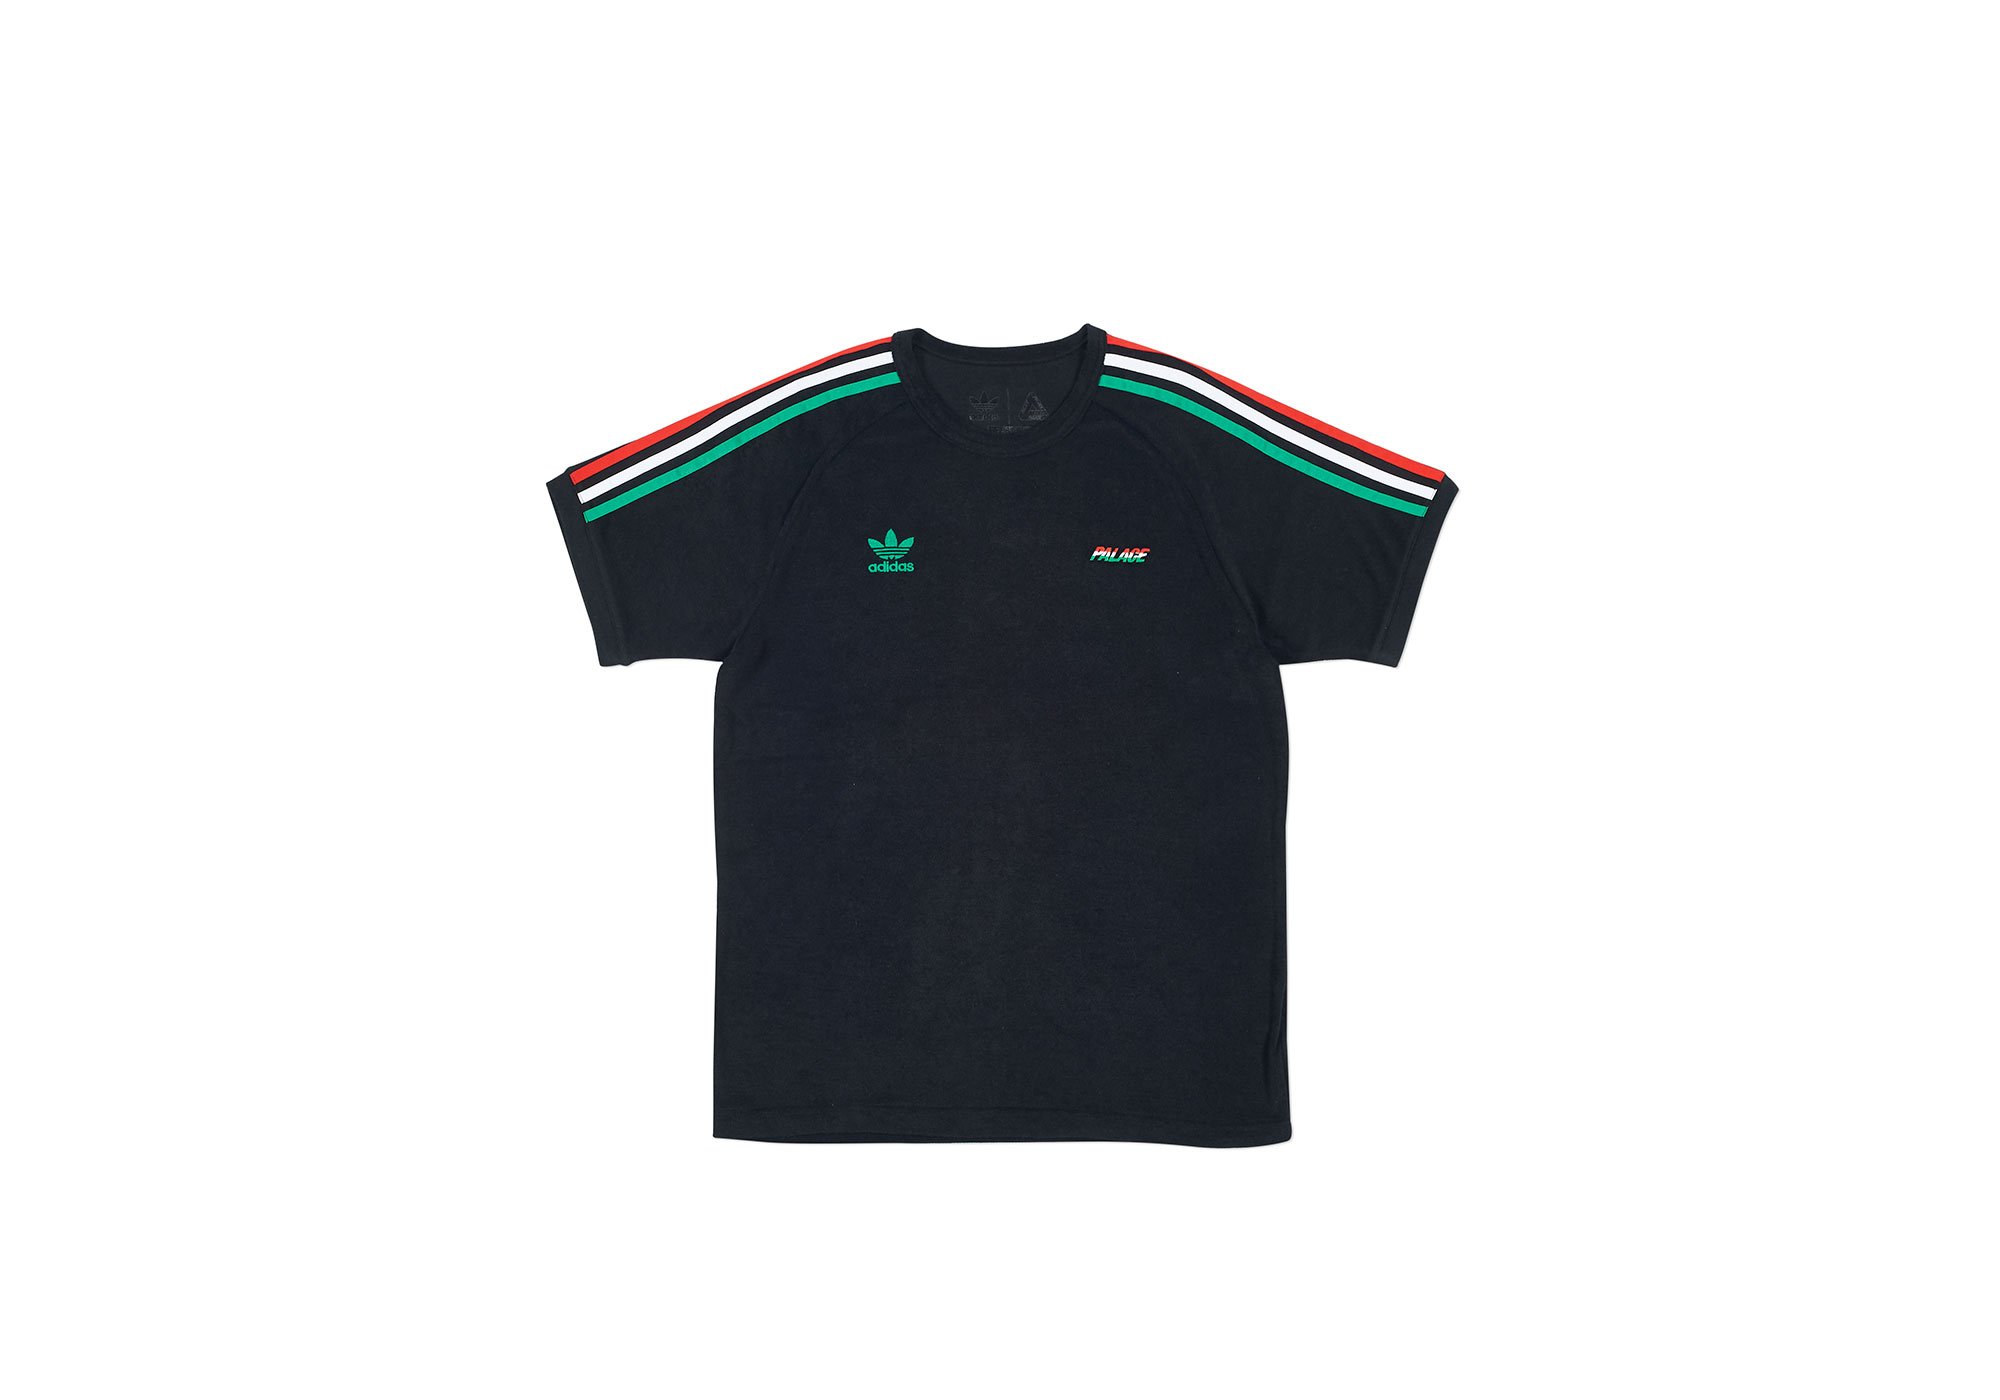 Palace adidas Terry T-Shirt Black - SS18